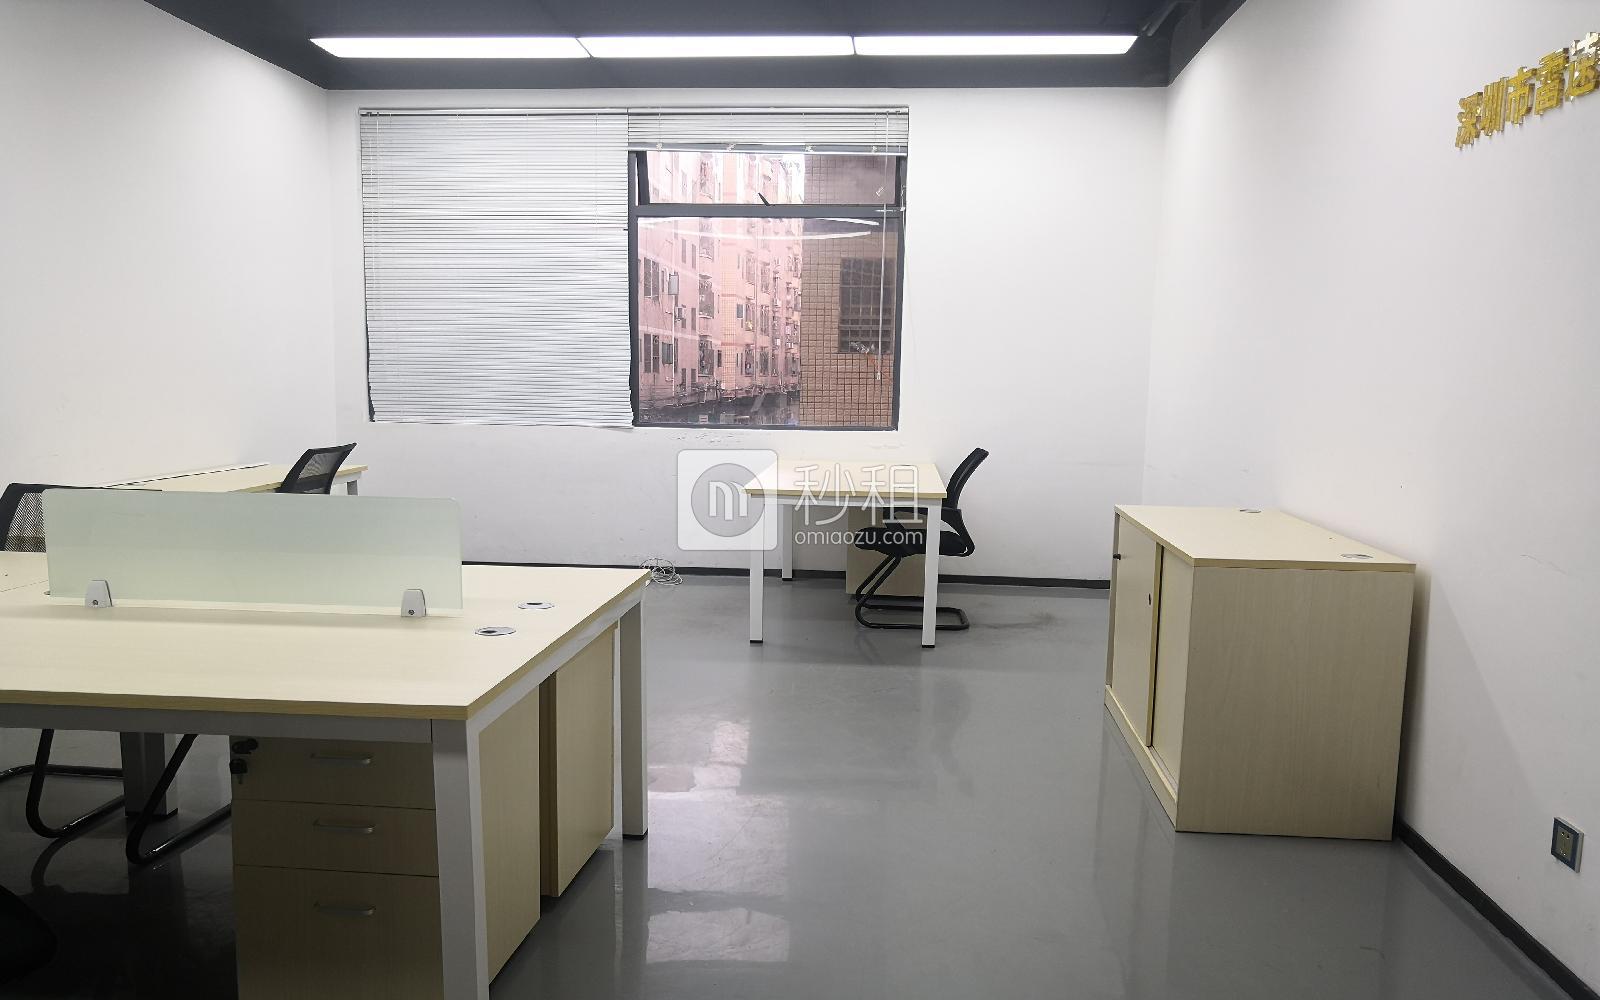  U优·优客工场写字楼出租61平米精装办公室52元/m².月